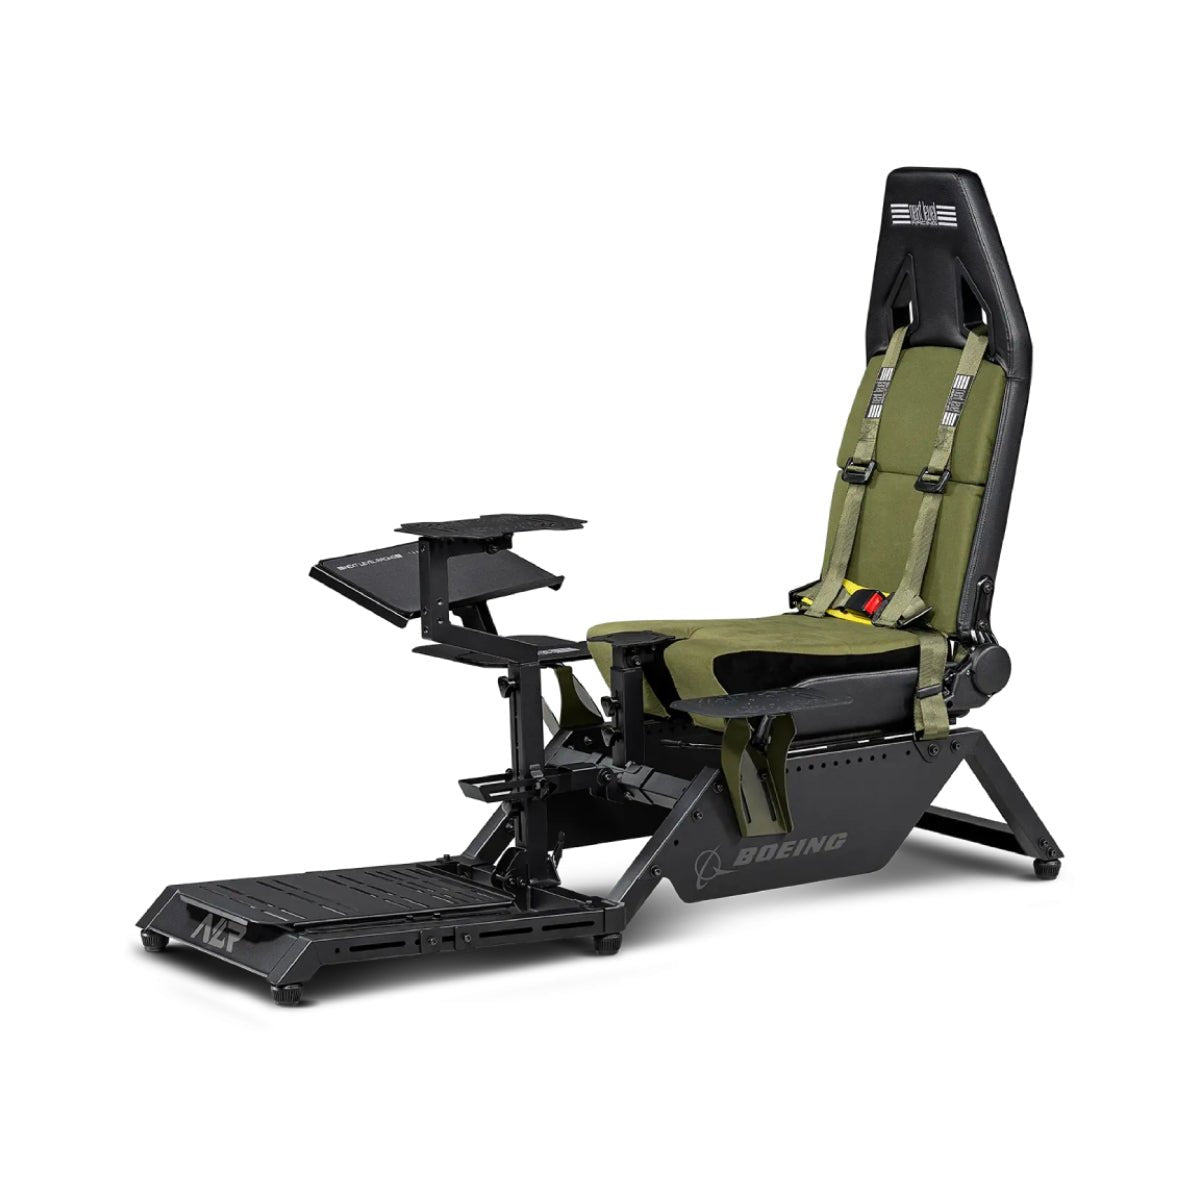 Next Level Racing Flight Simulator: Boeing Military Edition - محاكي طيران - Store 974 | ستور ٩٧٤